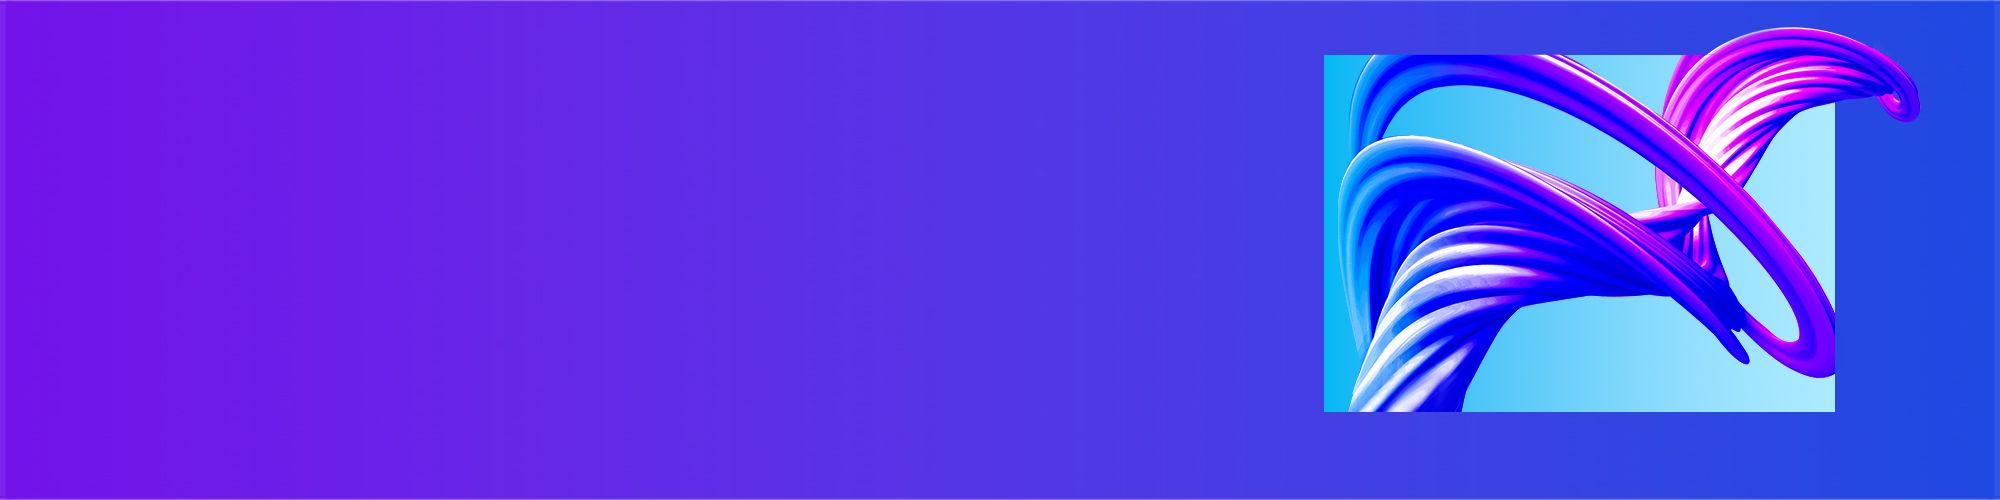 blue-purple-swirly-abstract